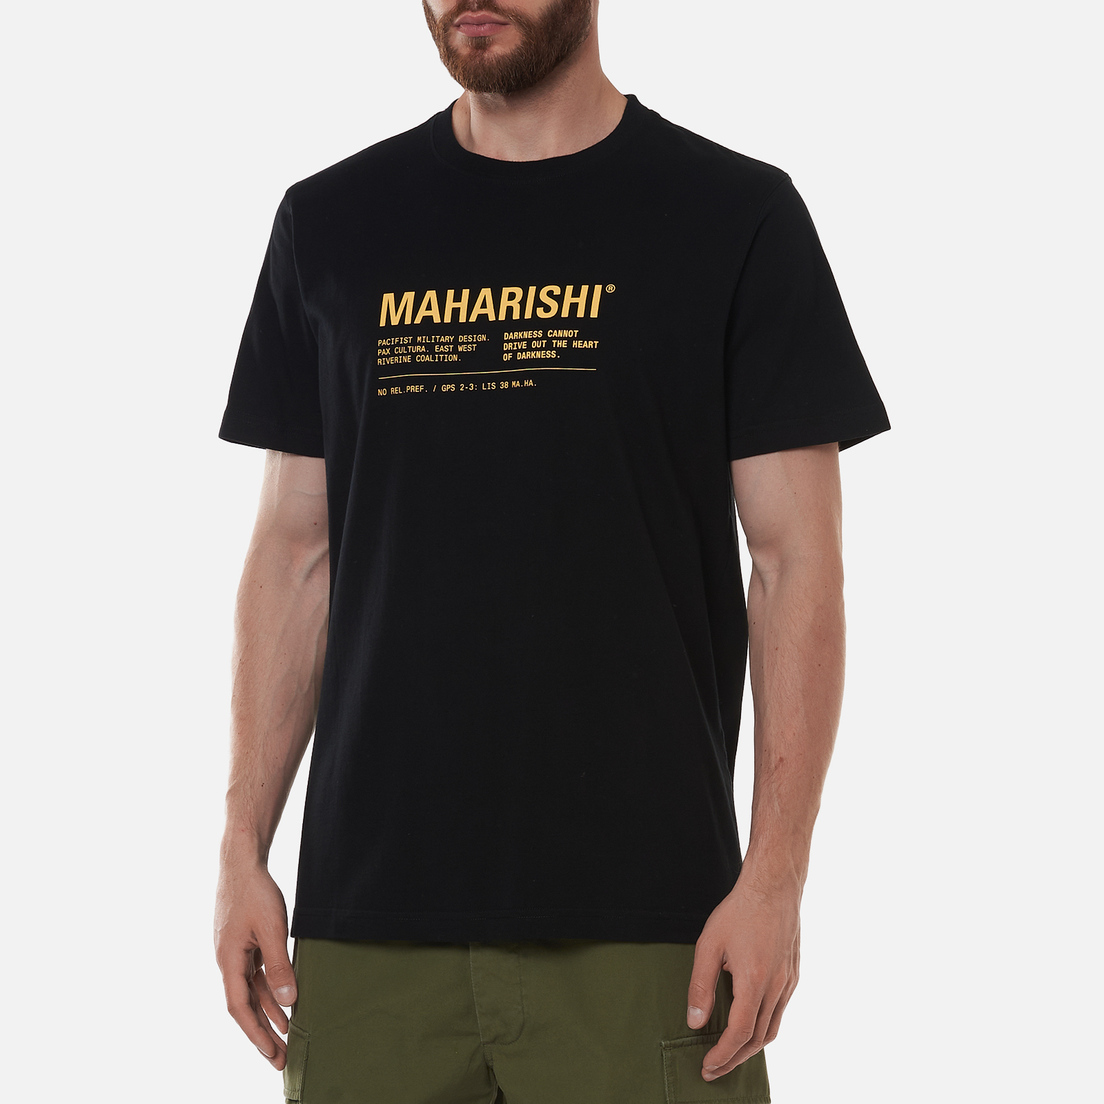 maharishi Мужская футболка Maha Miltype 21